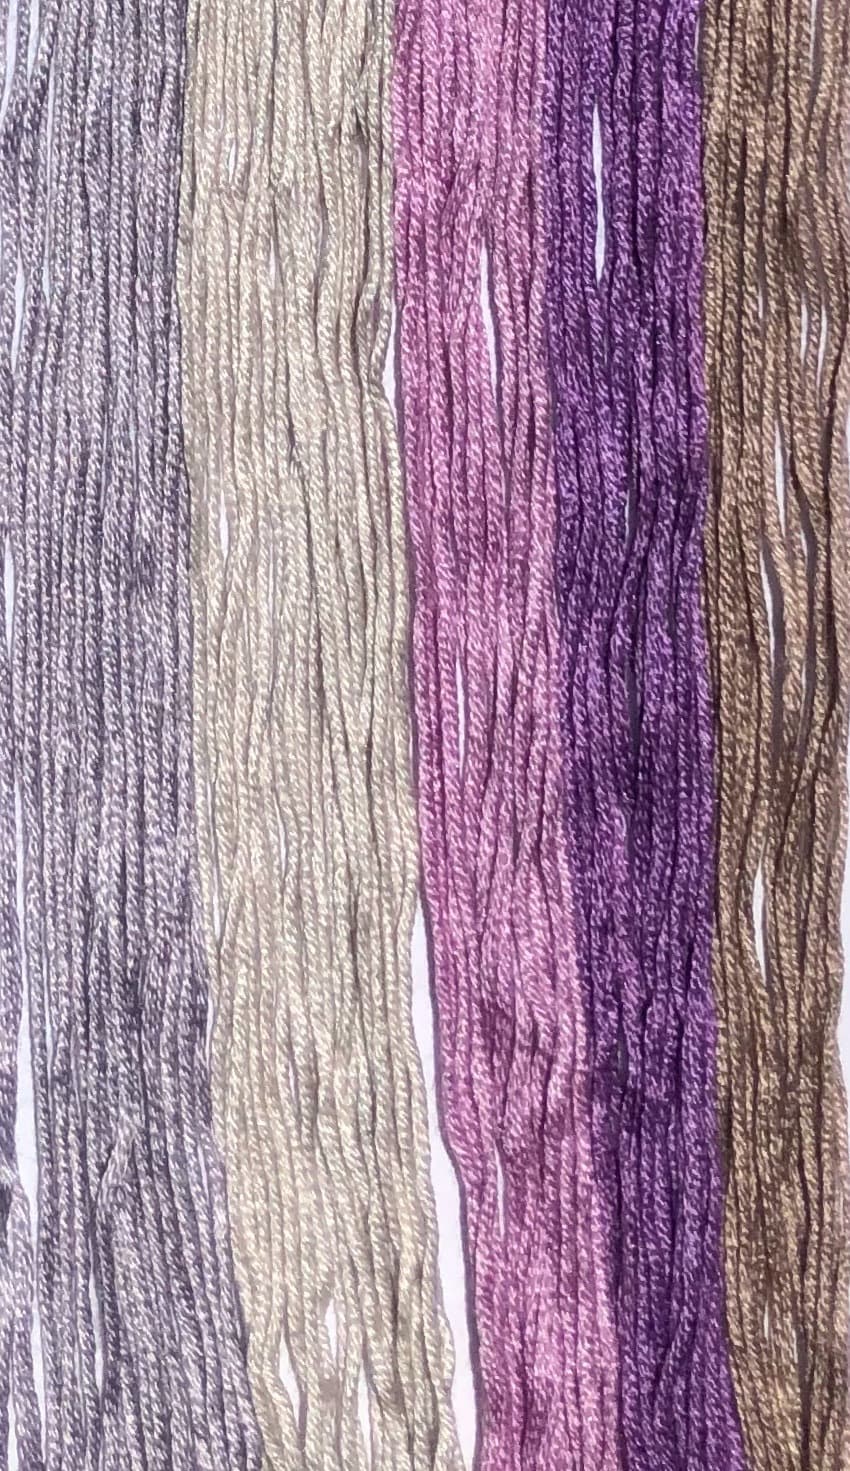 Soie d'Alger Silk Embroidery Thread - Light Neutrals – Snuggly Monkey